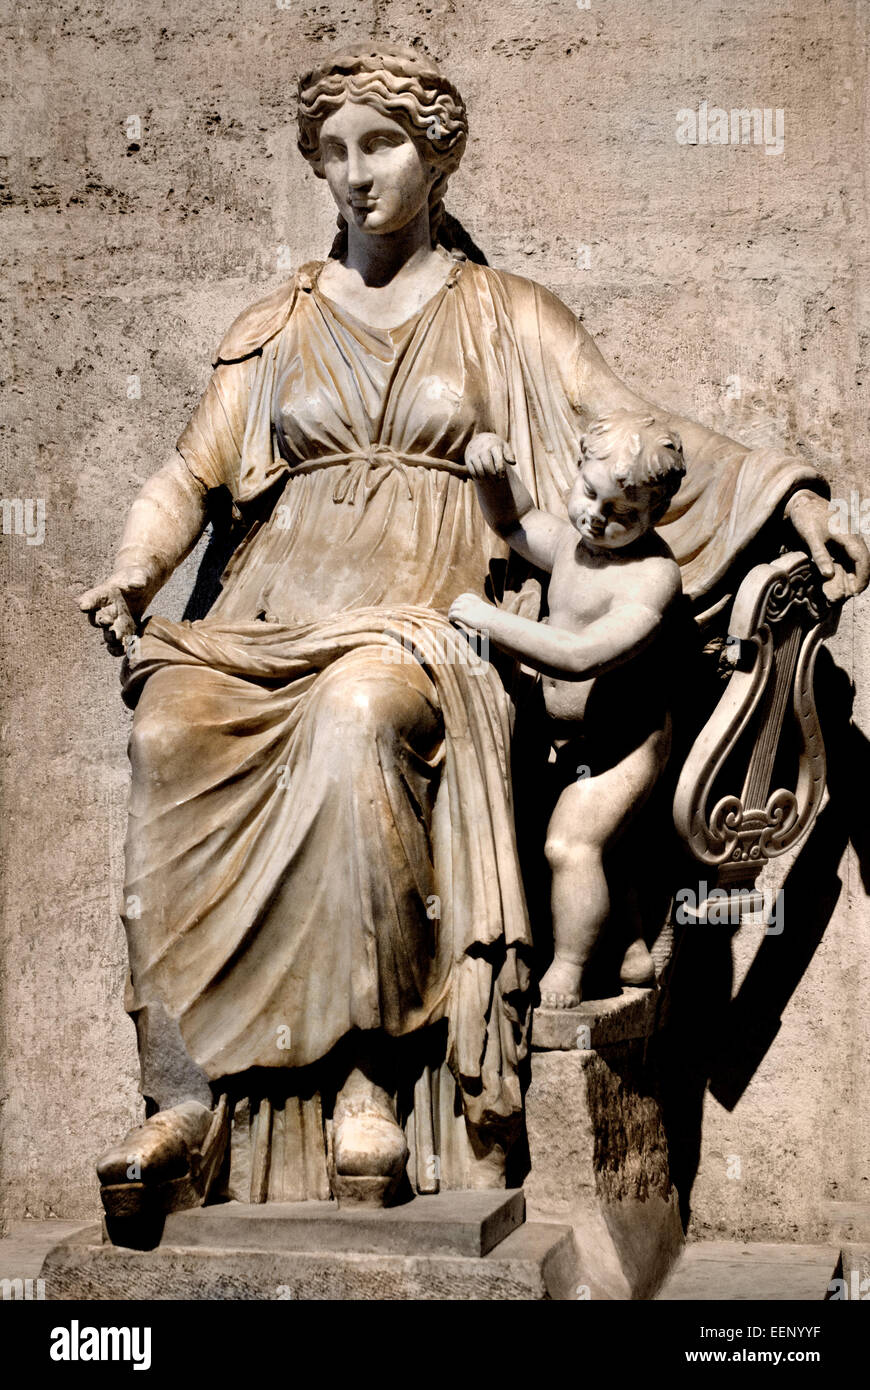 Estatua femenina con niño sentado original griego del siglo IV A.C. Roma Romana Museo Capitolino Italia italiano Foto de stock